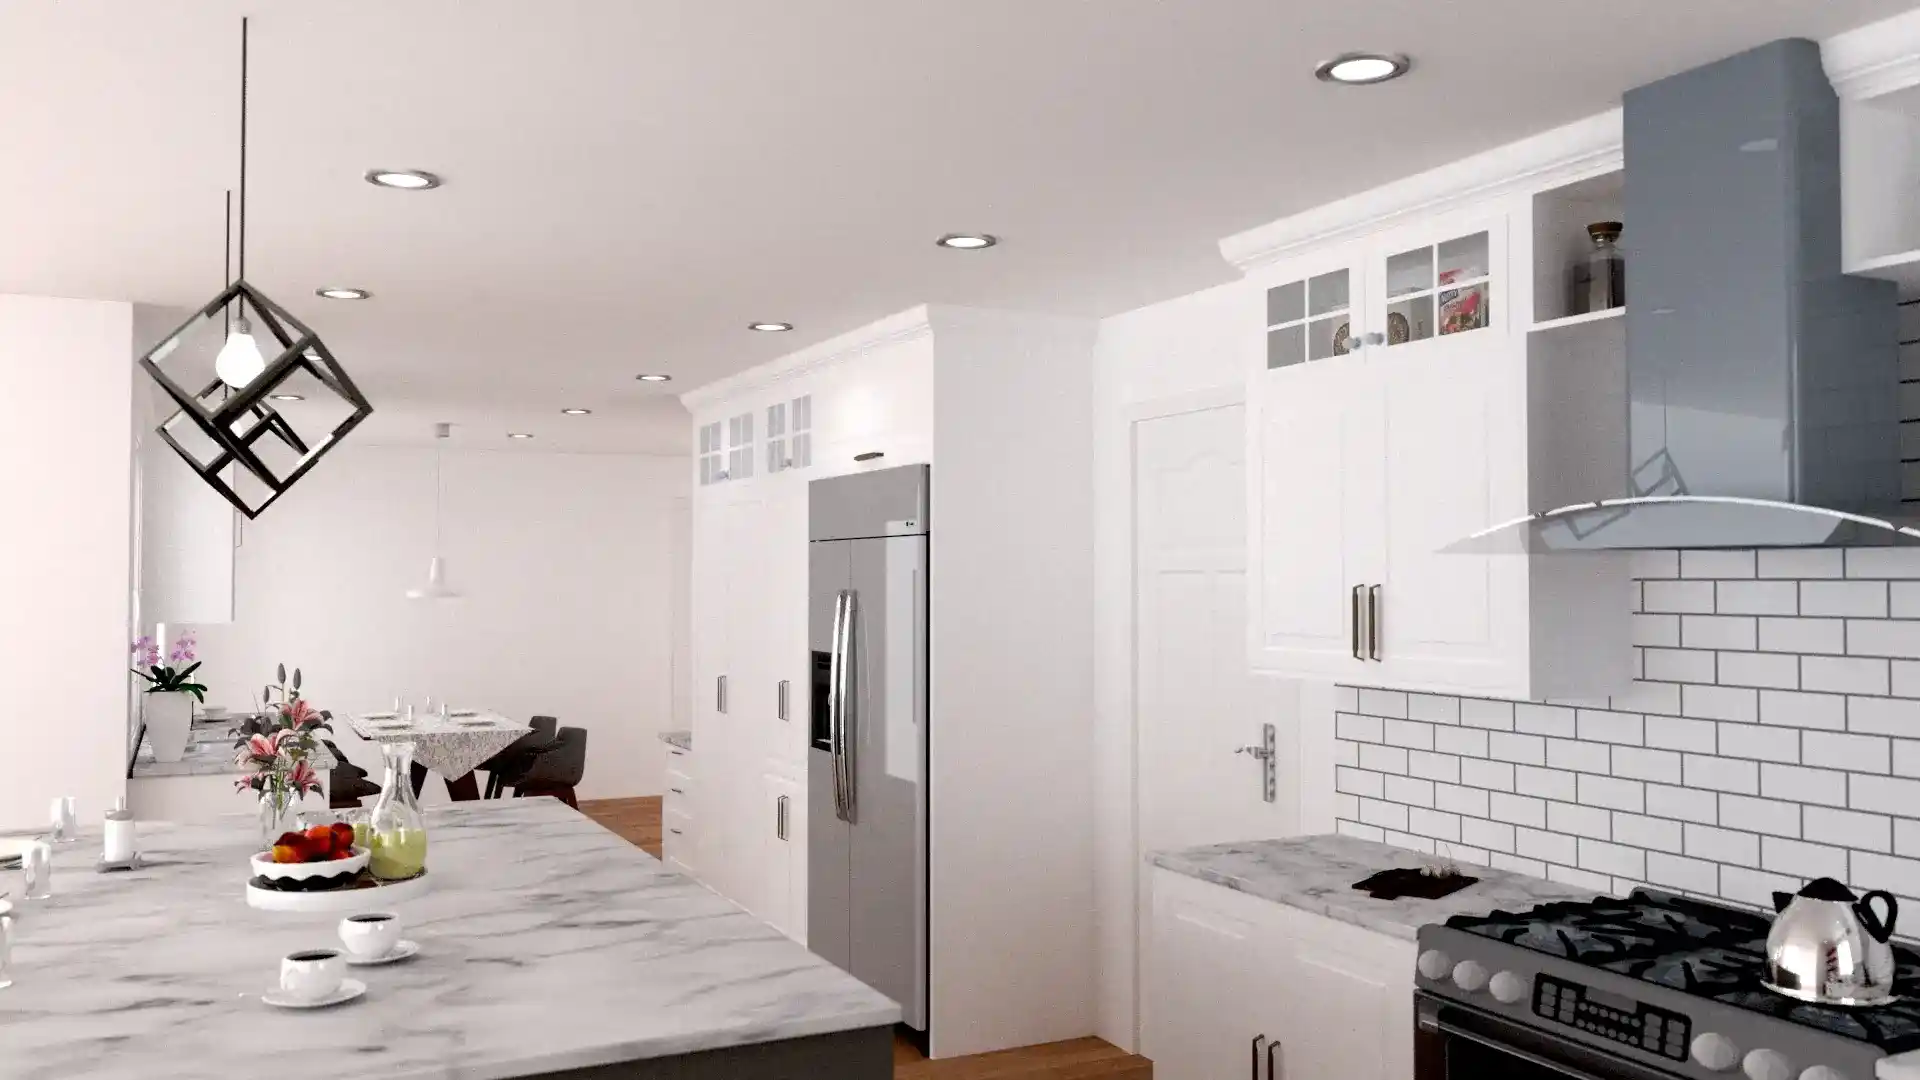 3D interior design of kitchens